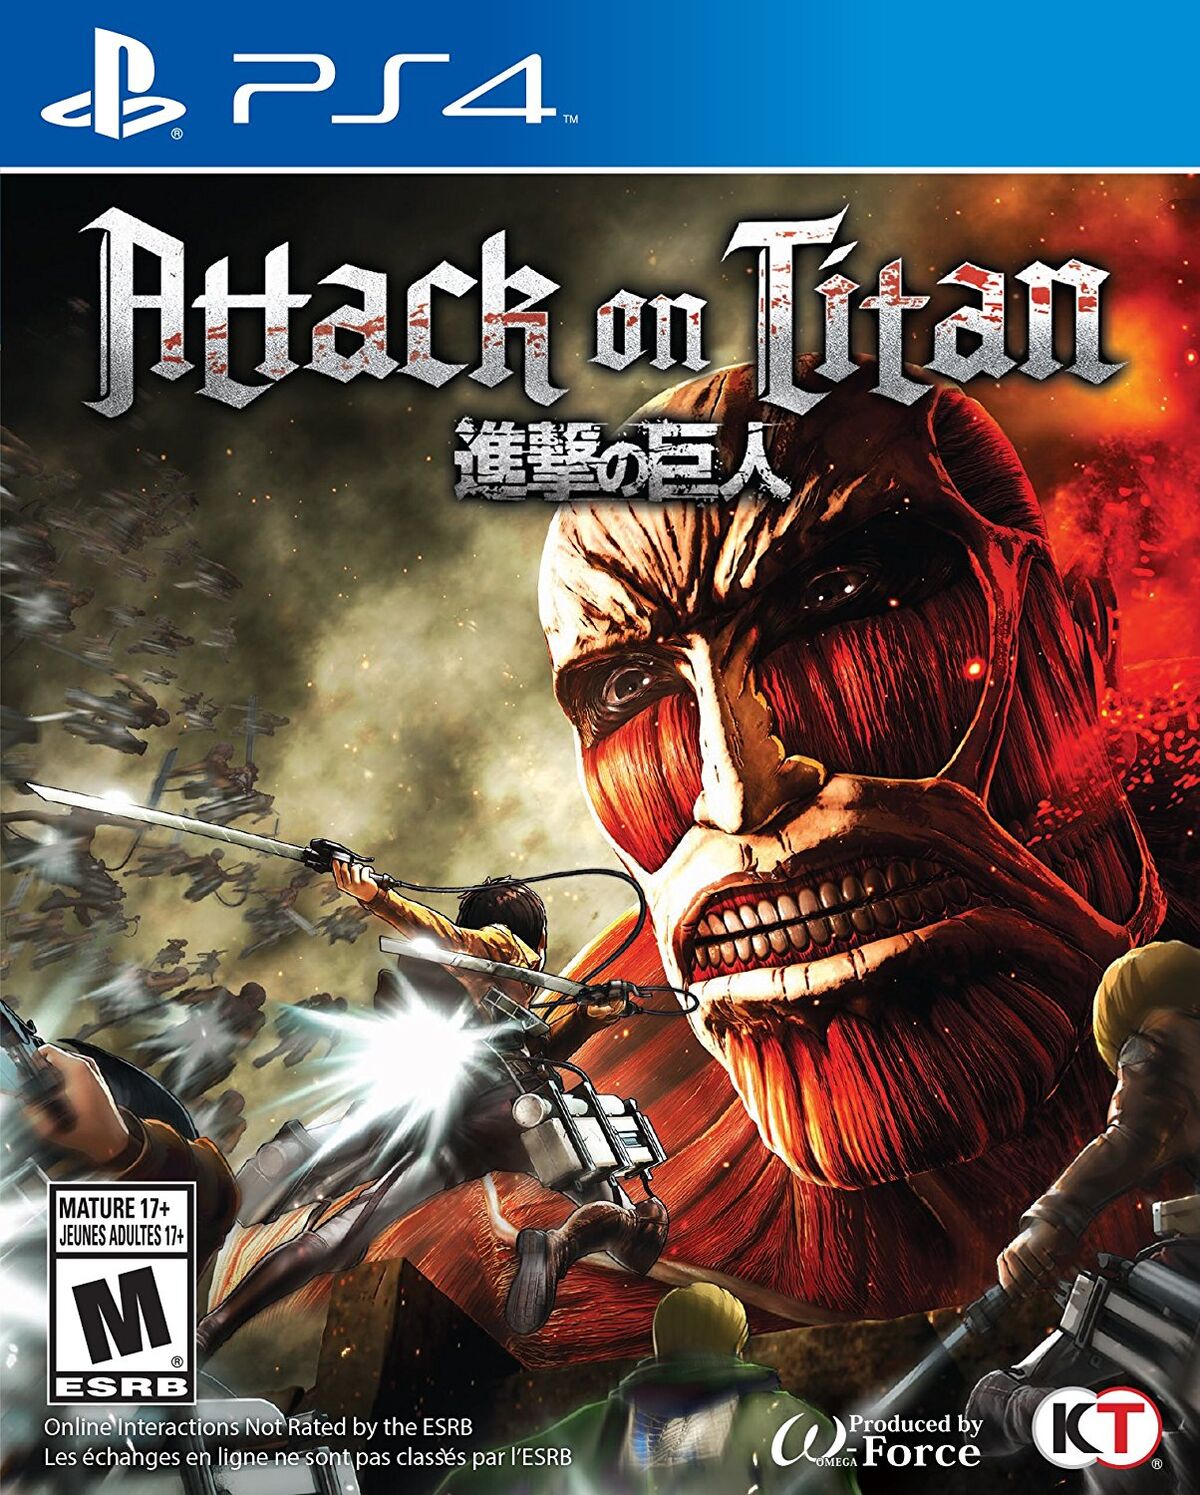 Attack on Titan Final Season Part 2 Teaser Visual Revealed : r/attackontitan